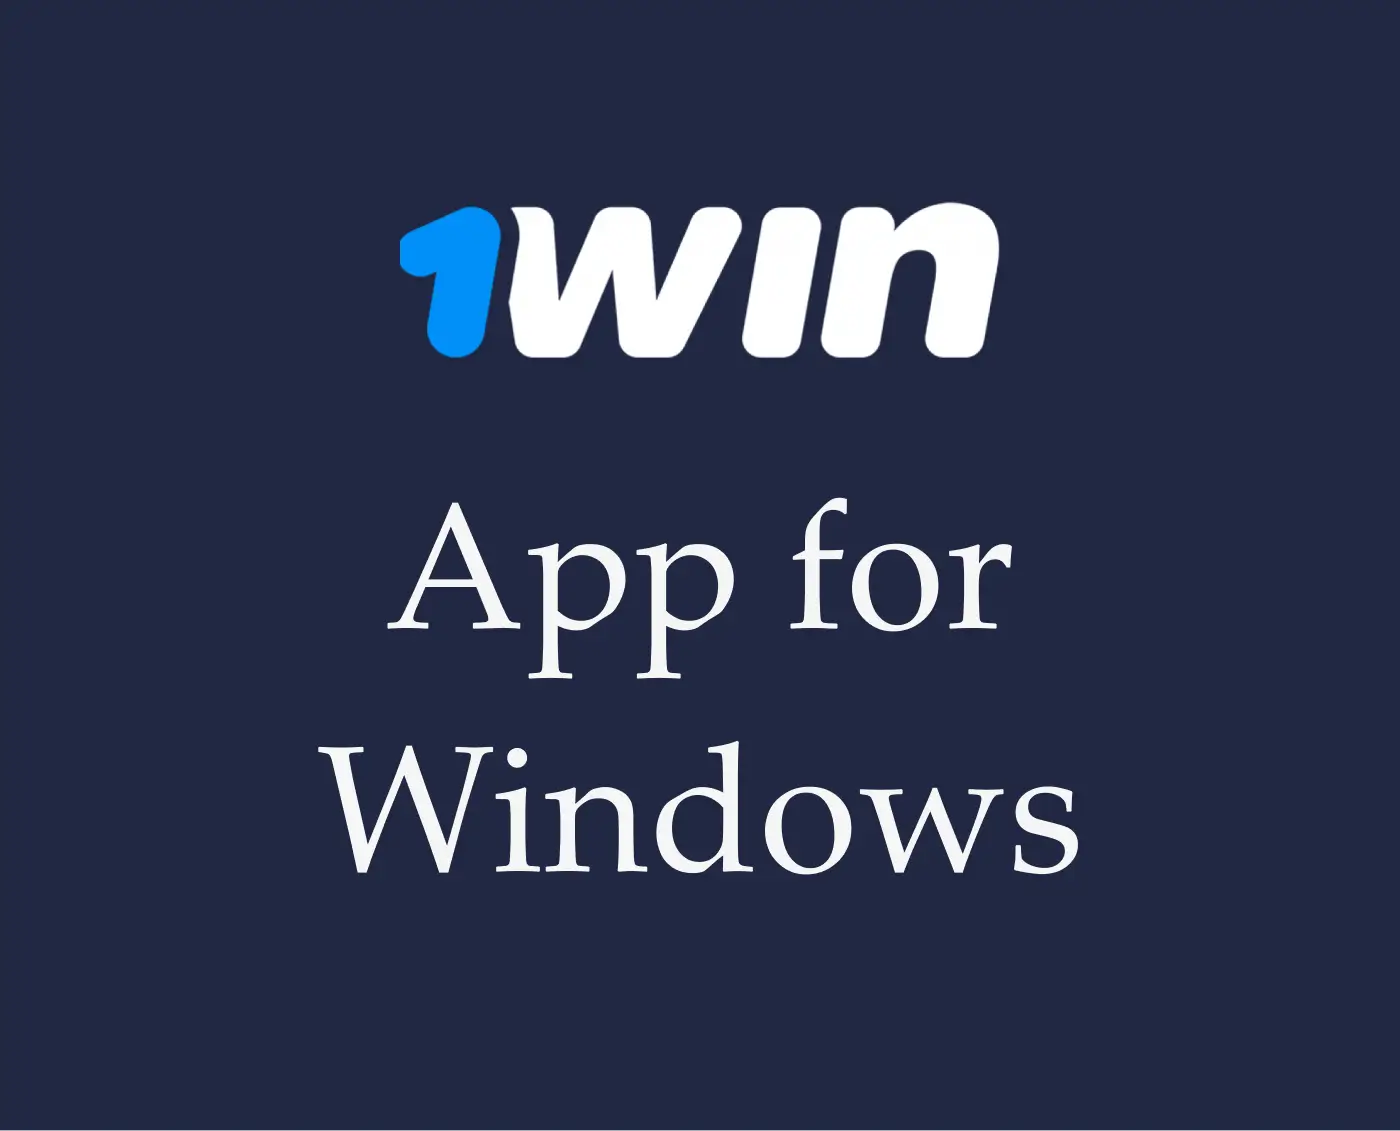 1win lietotne Windows